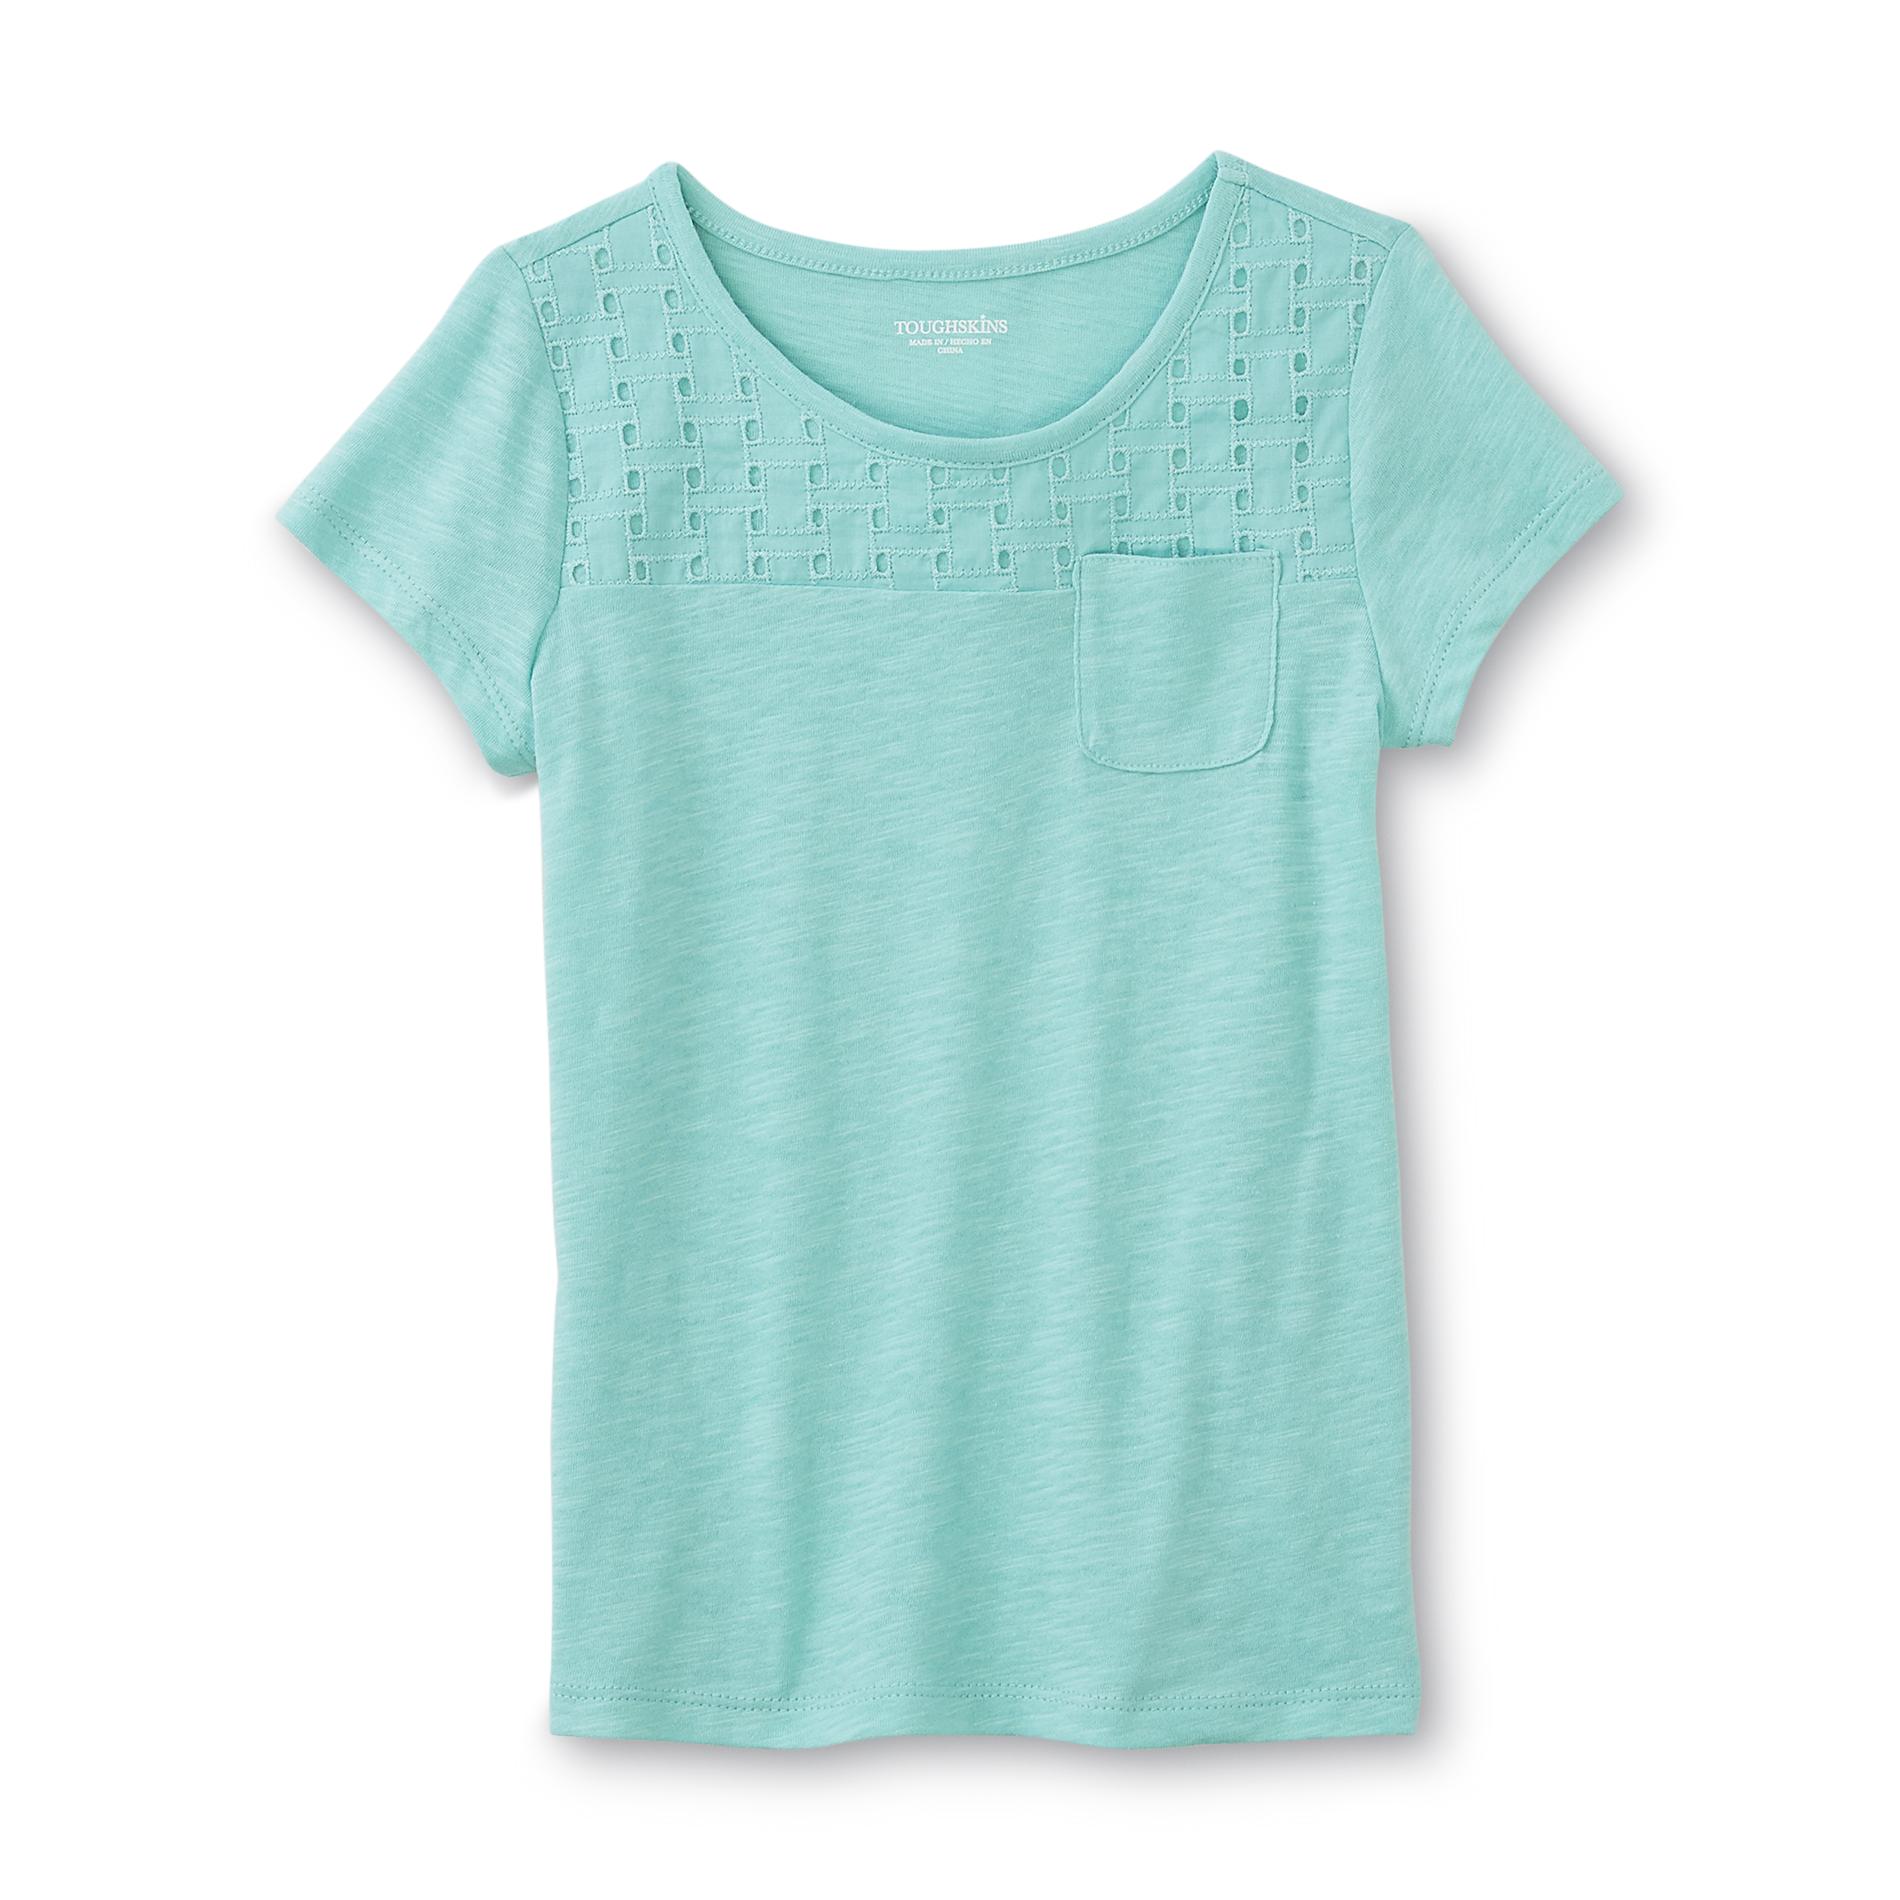 Toughskins Infant & Toddler Girl's Textured T-Shirt